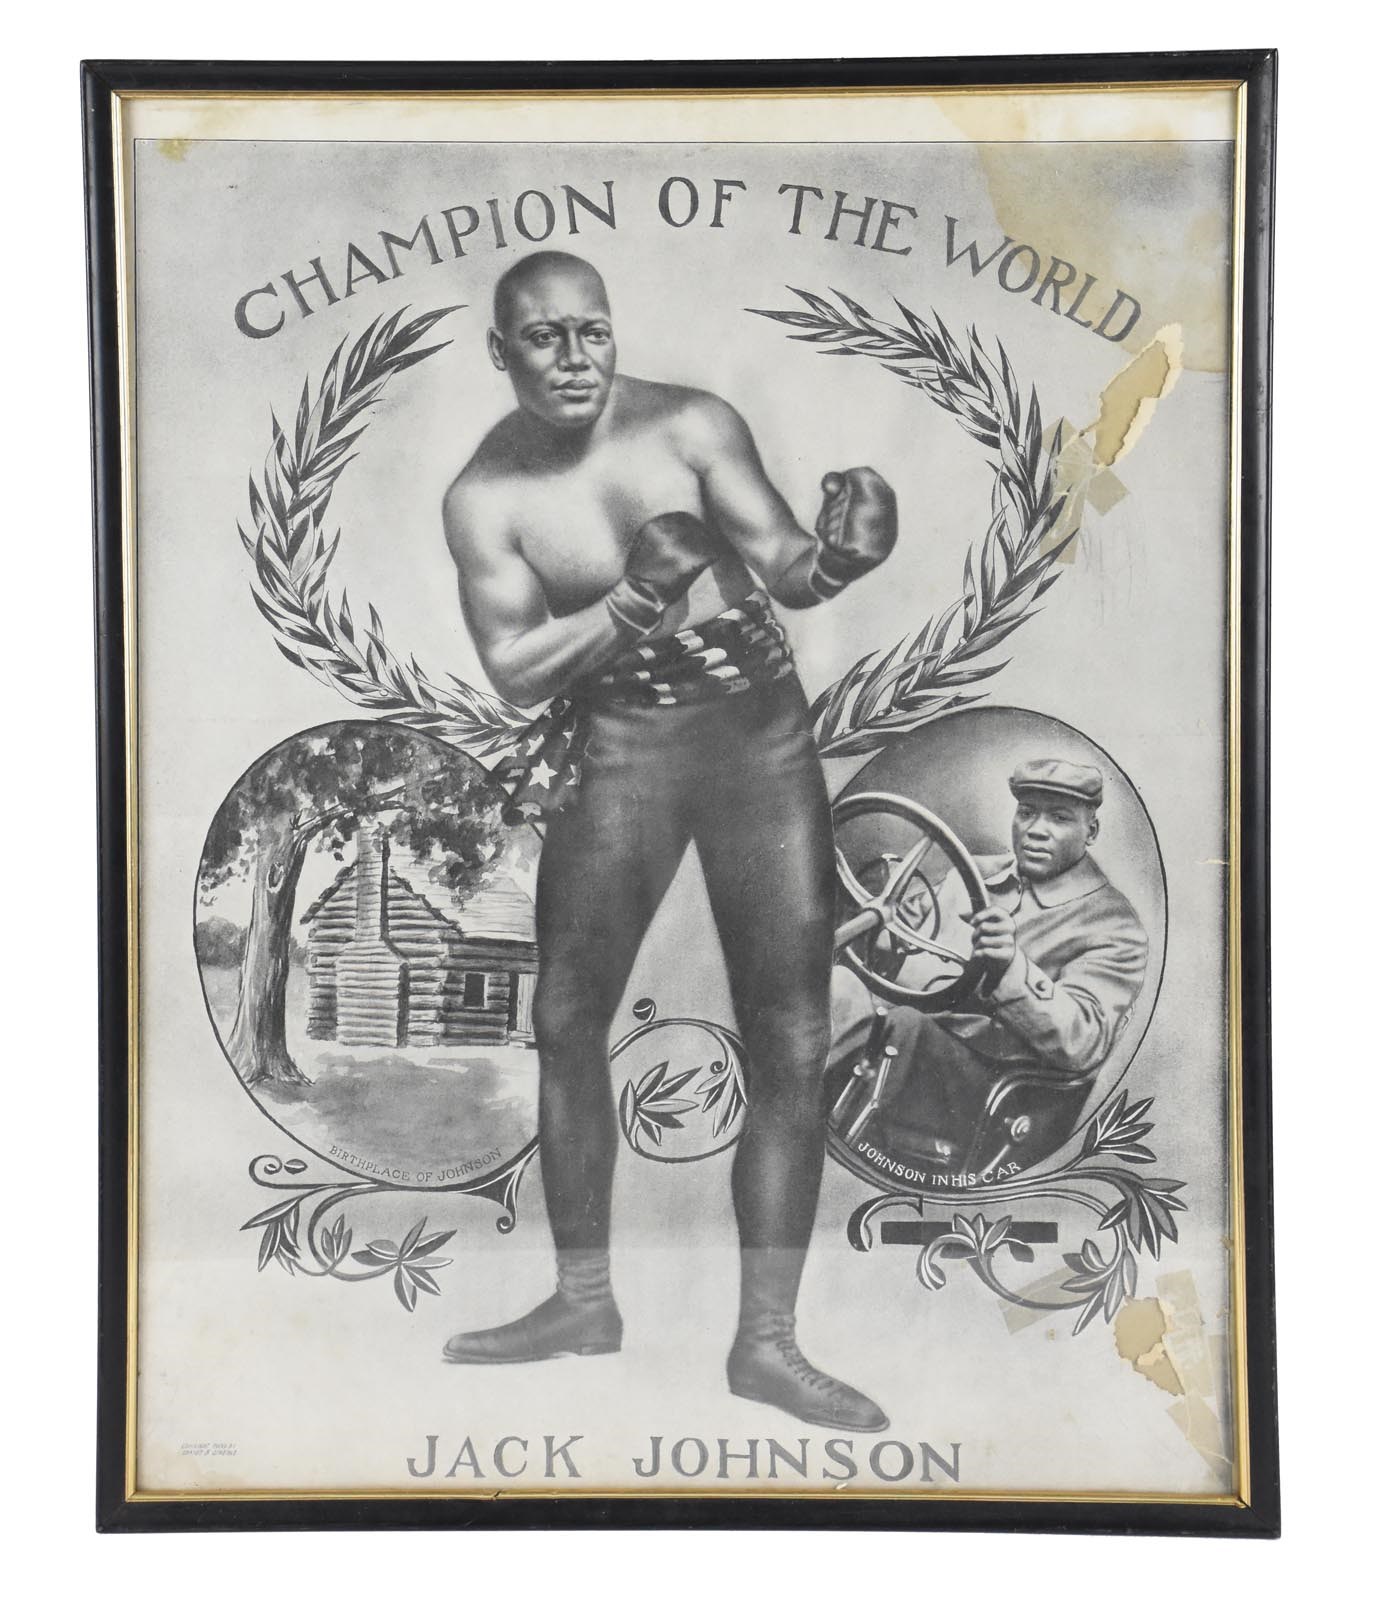 Muhammad Ali & Boxing - Rare 1909 Jack Johnson Champion of the World Print